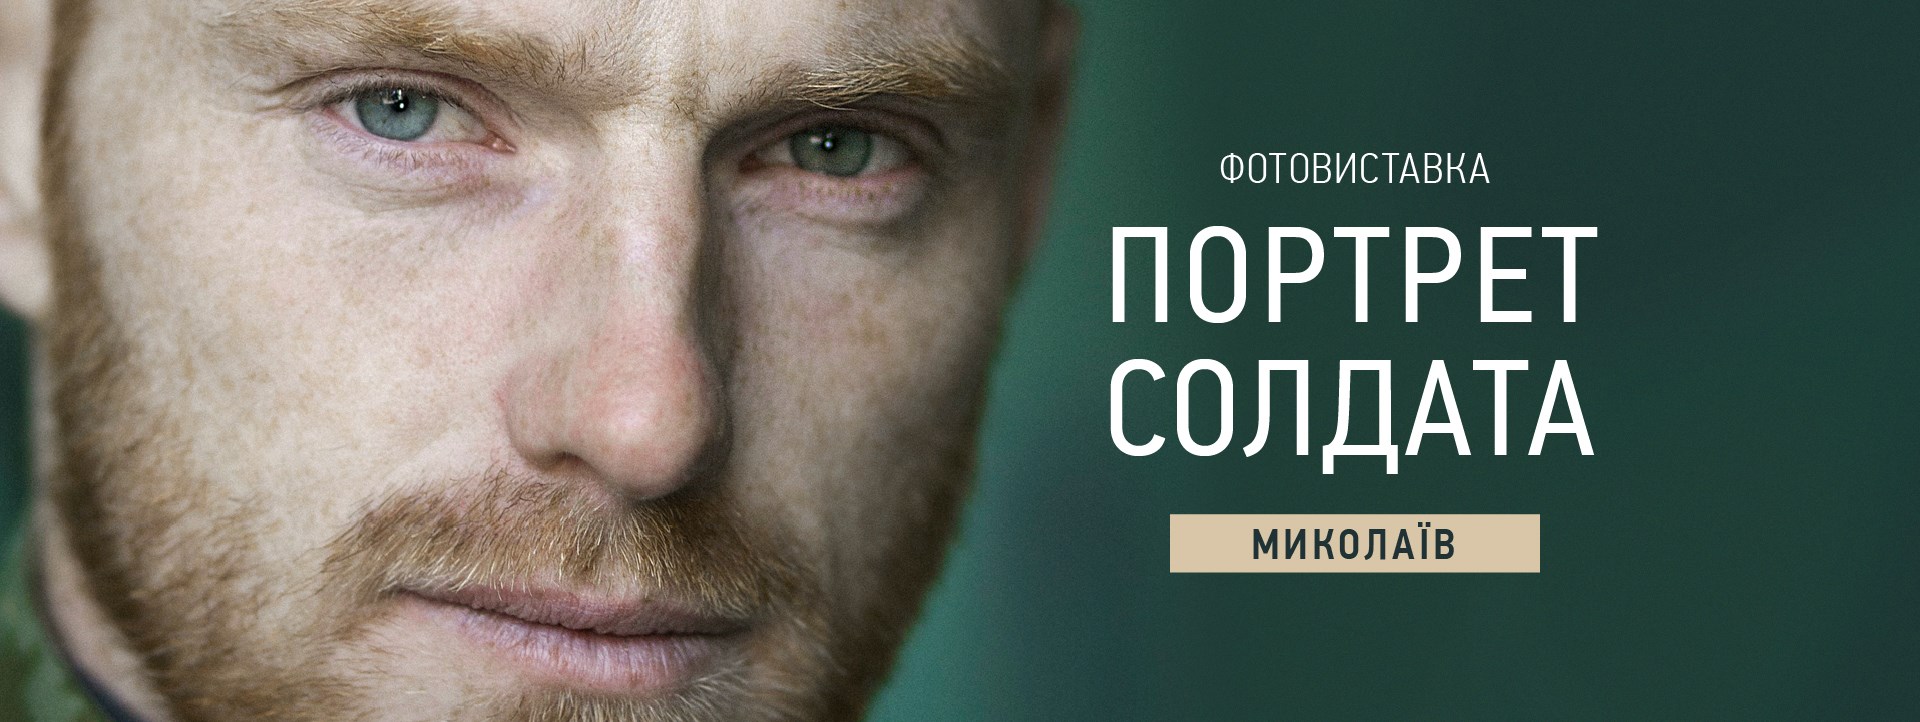 У Миколаїв привезуть виставку "Портрет солдата"